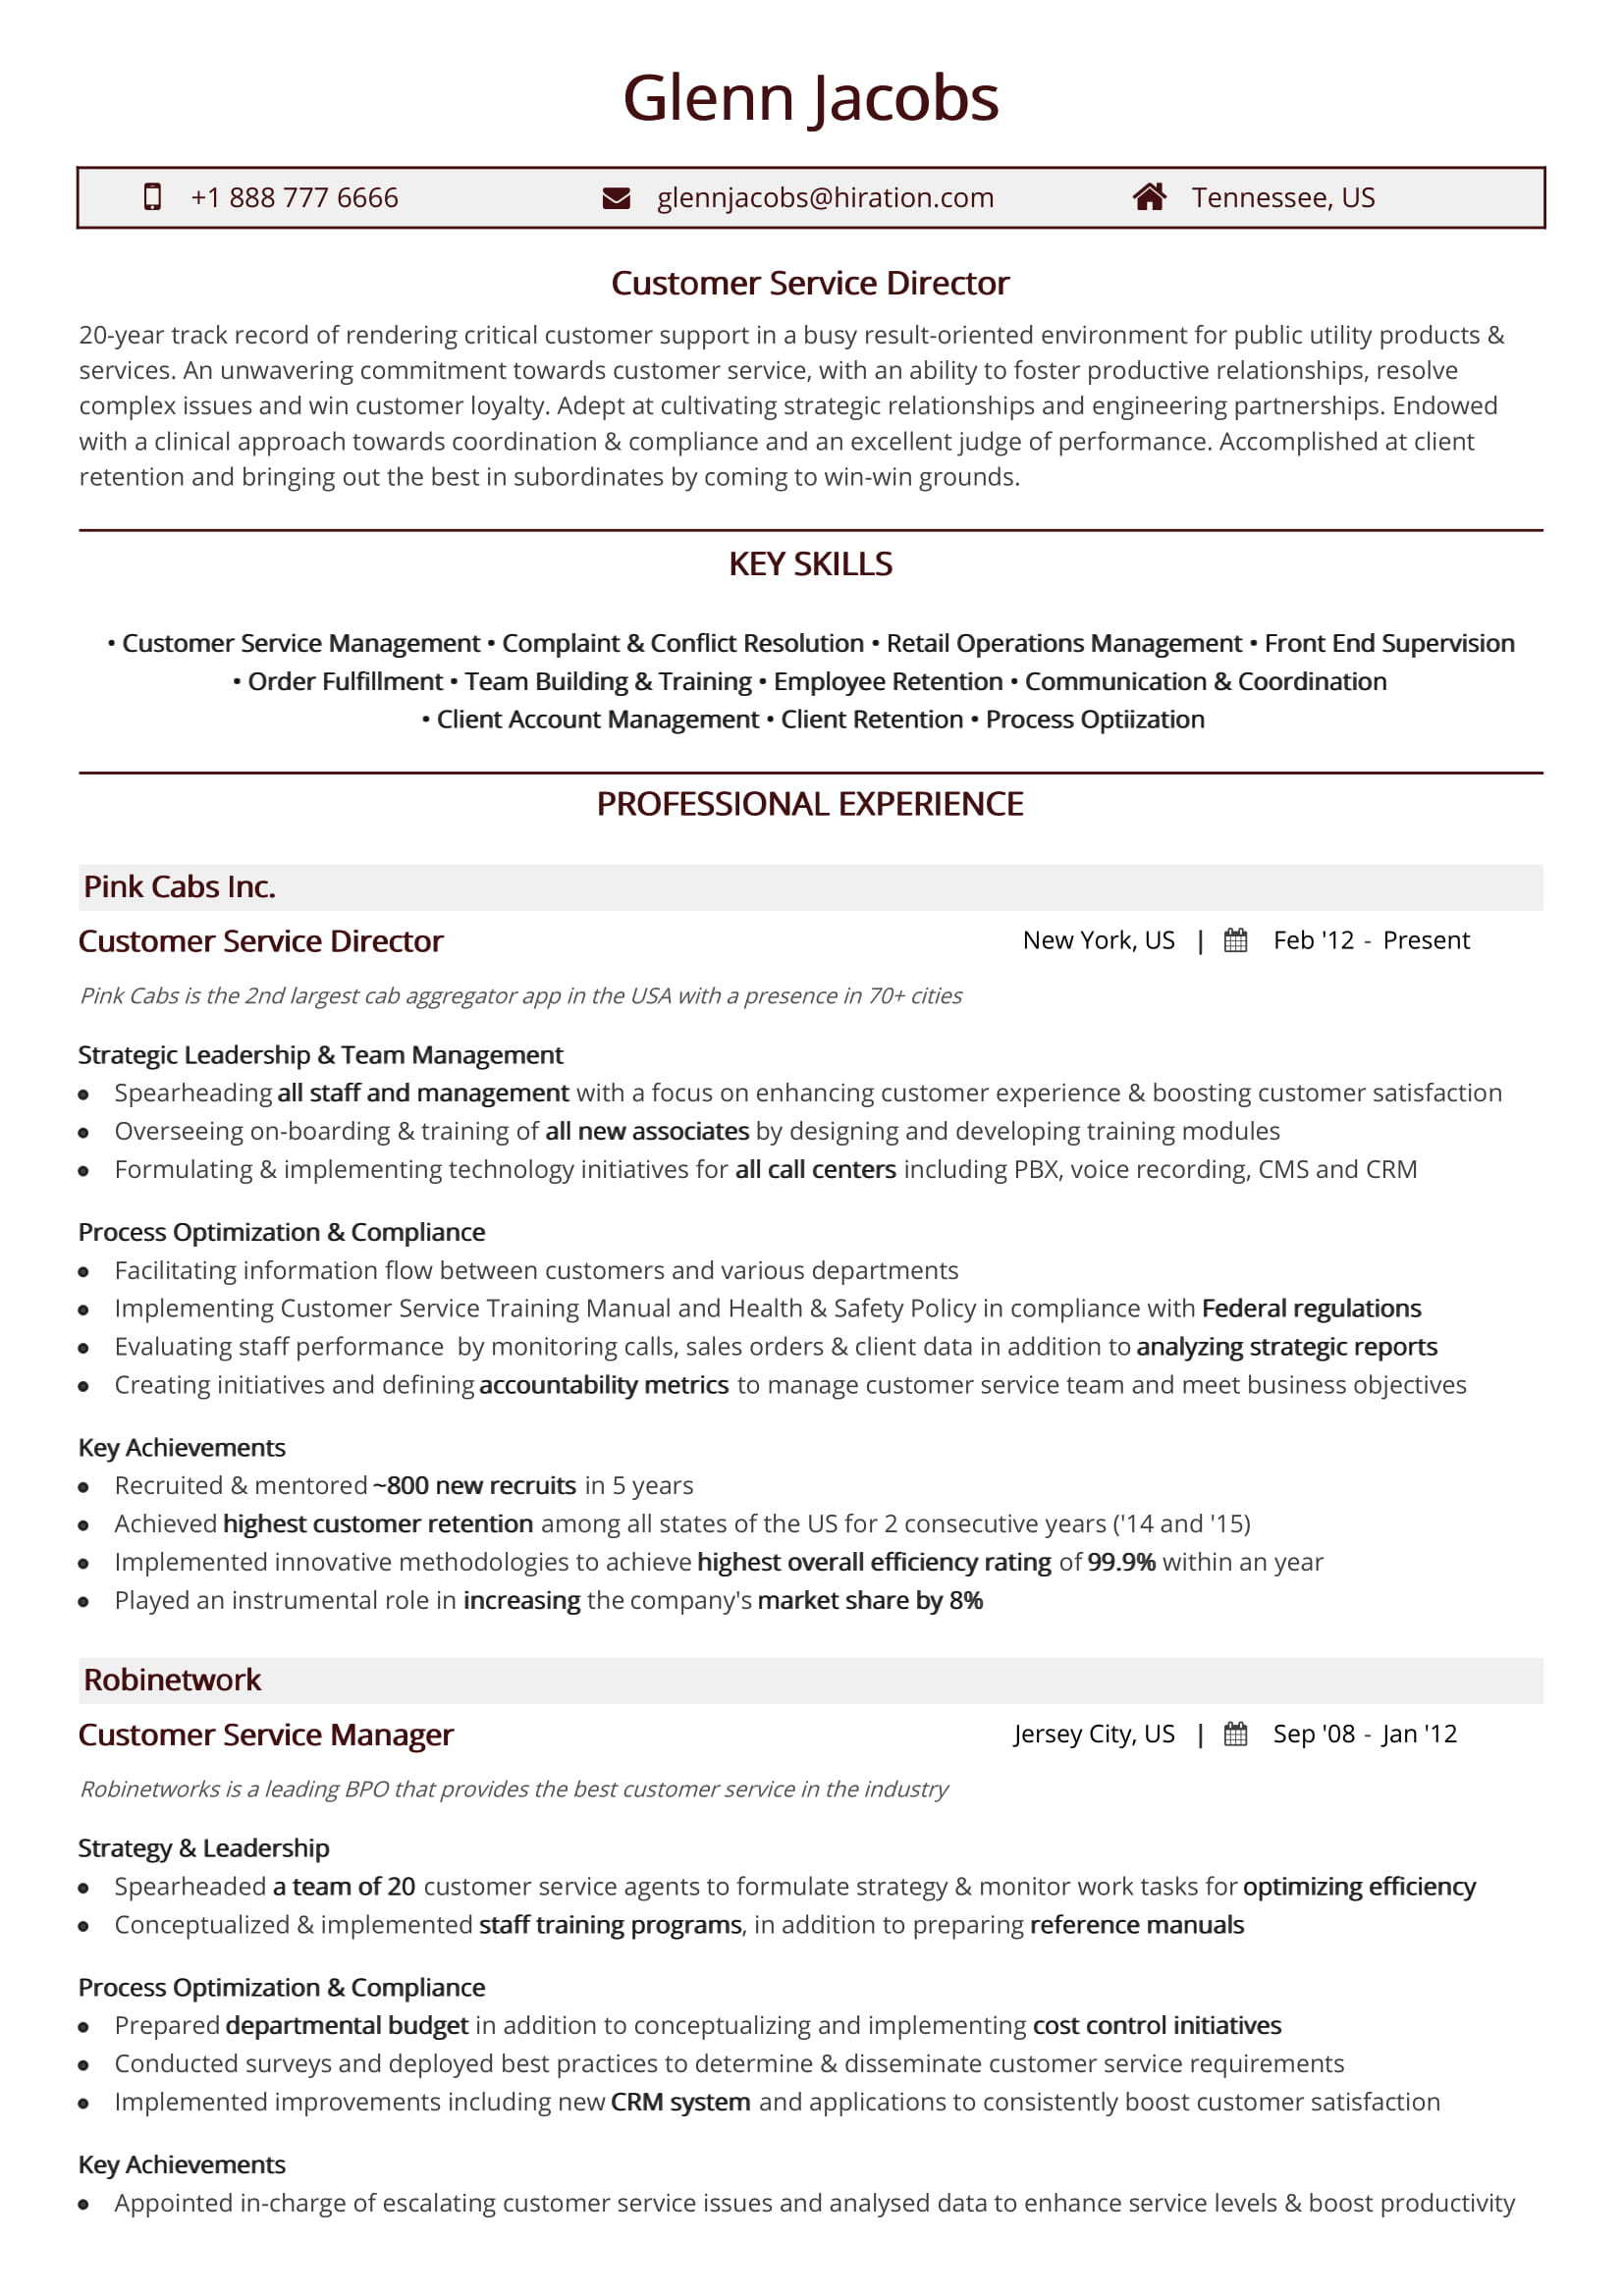 Sample Resume for Customer Service Team Leader Free Customer Service Director Resume Sample 2020 by Hiration